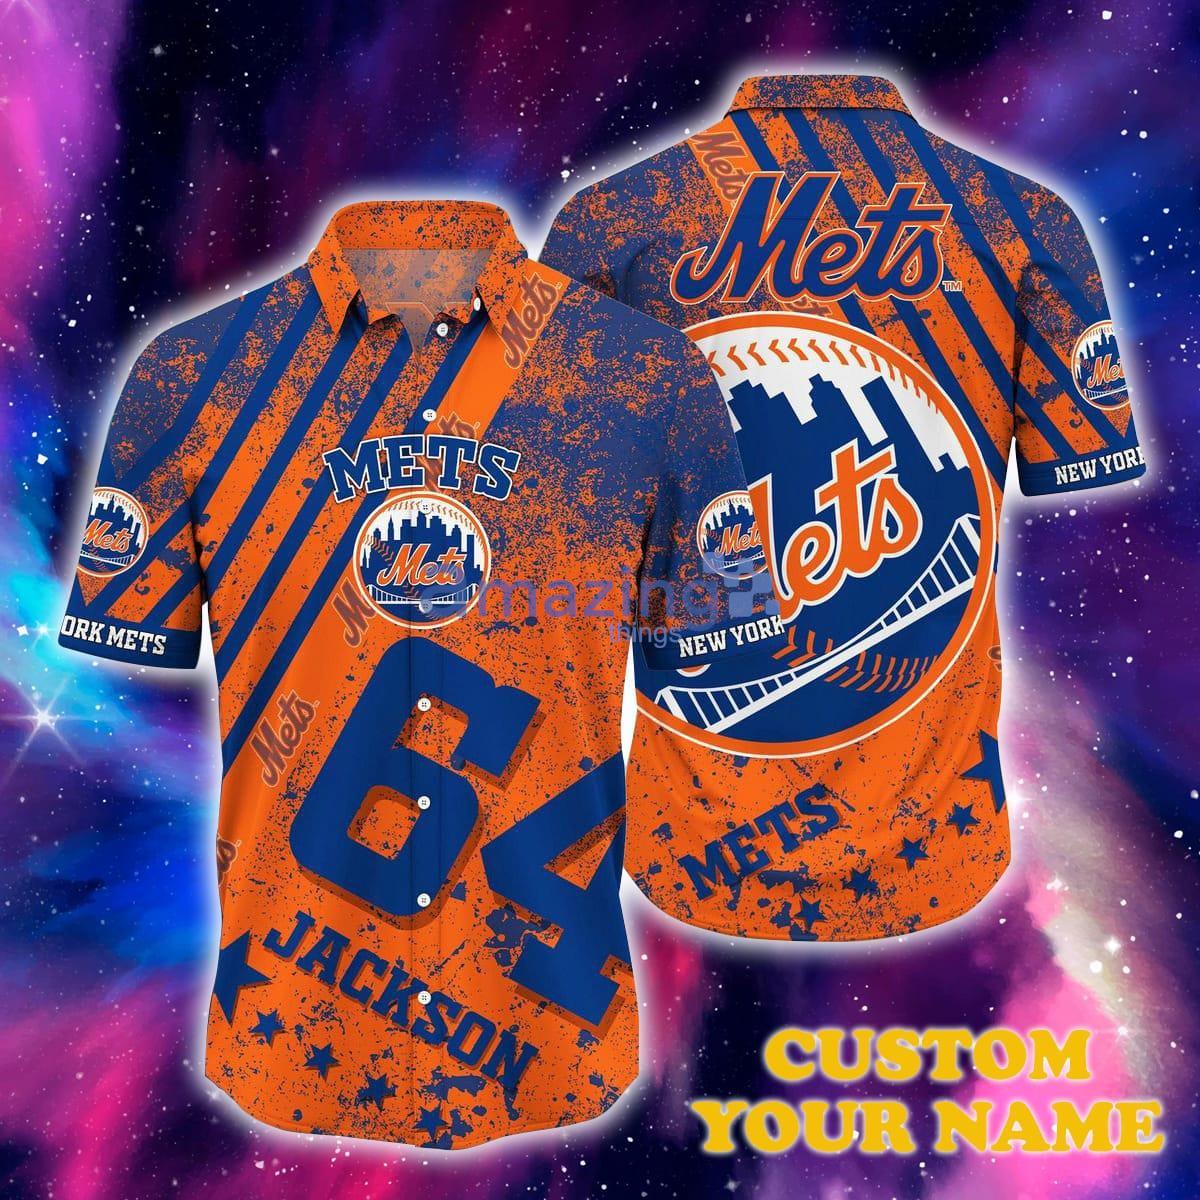 New York Mets Women MLB Jerseys for sale